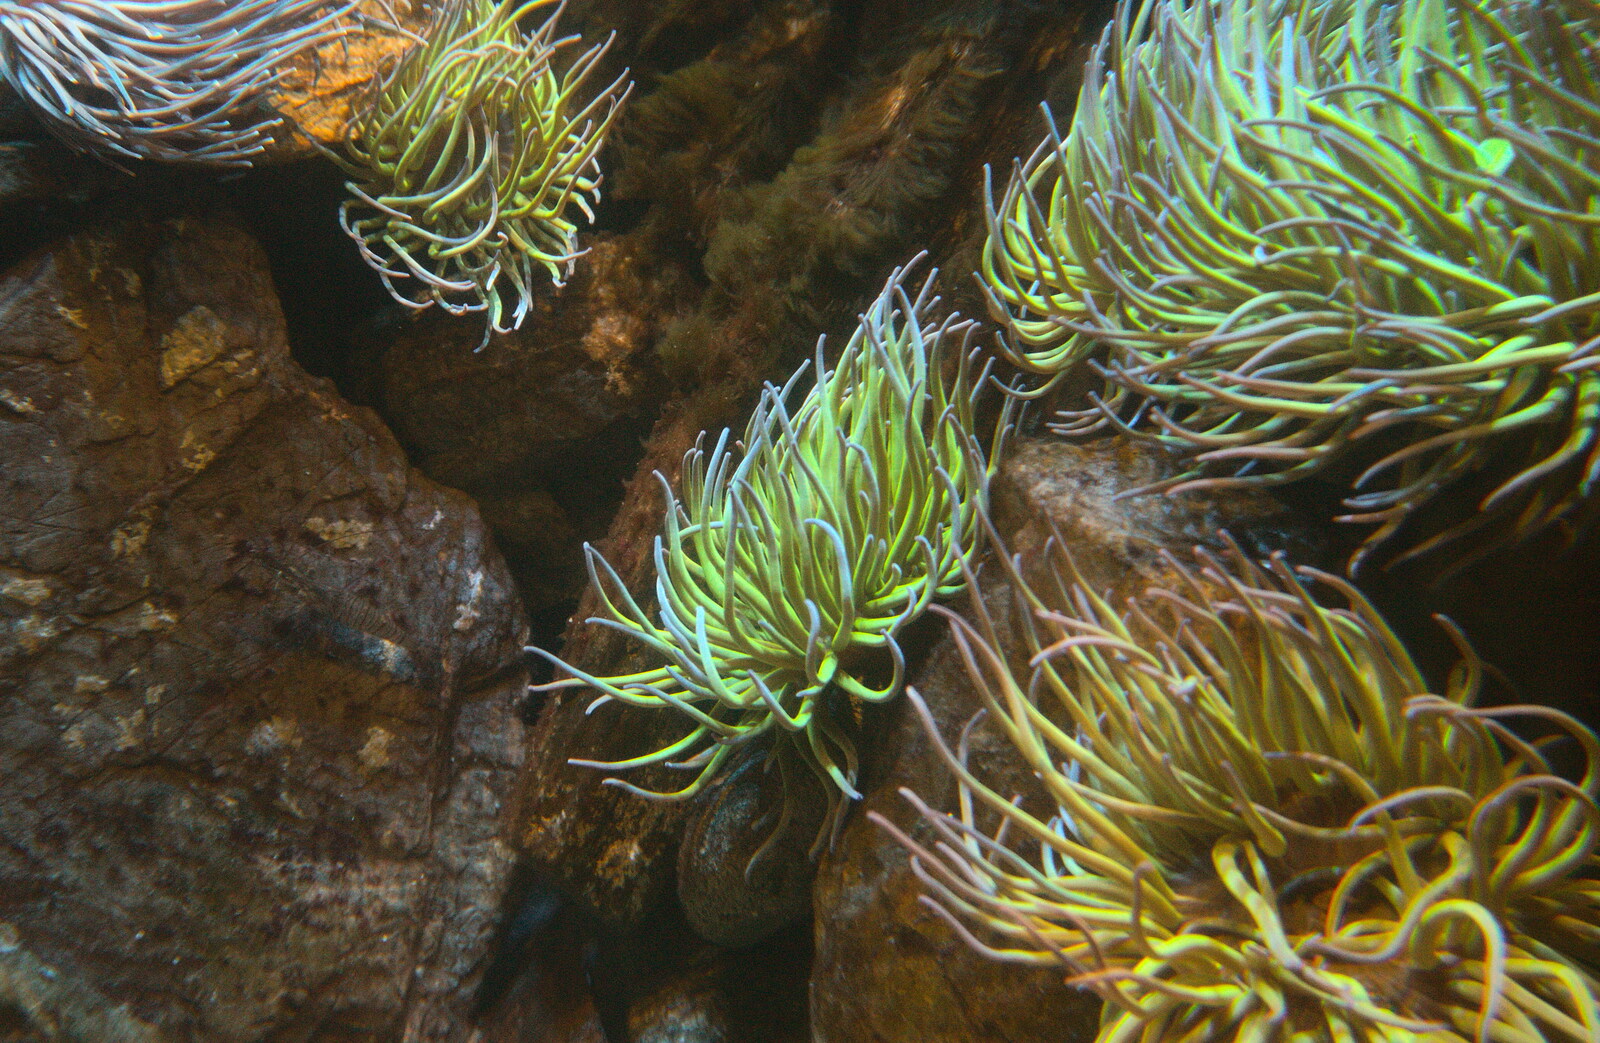 Wavy sea anemones from A Visit to the Aquarium, The Barbican and Dartmoor, Plymouth, Devon - 10th June 2012